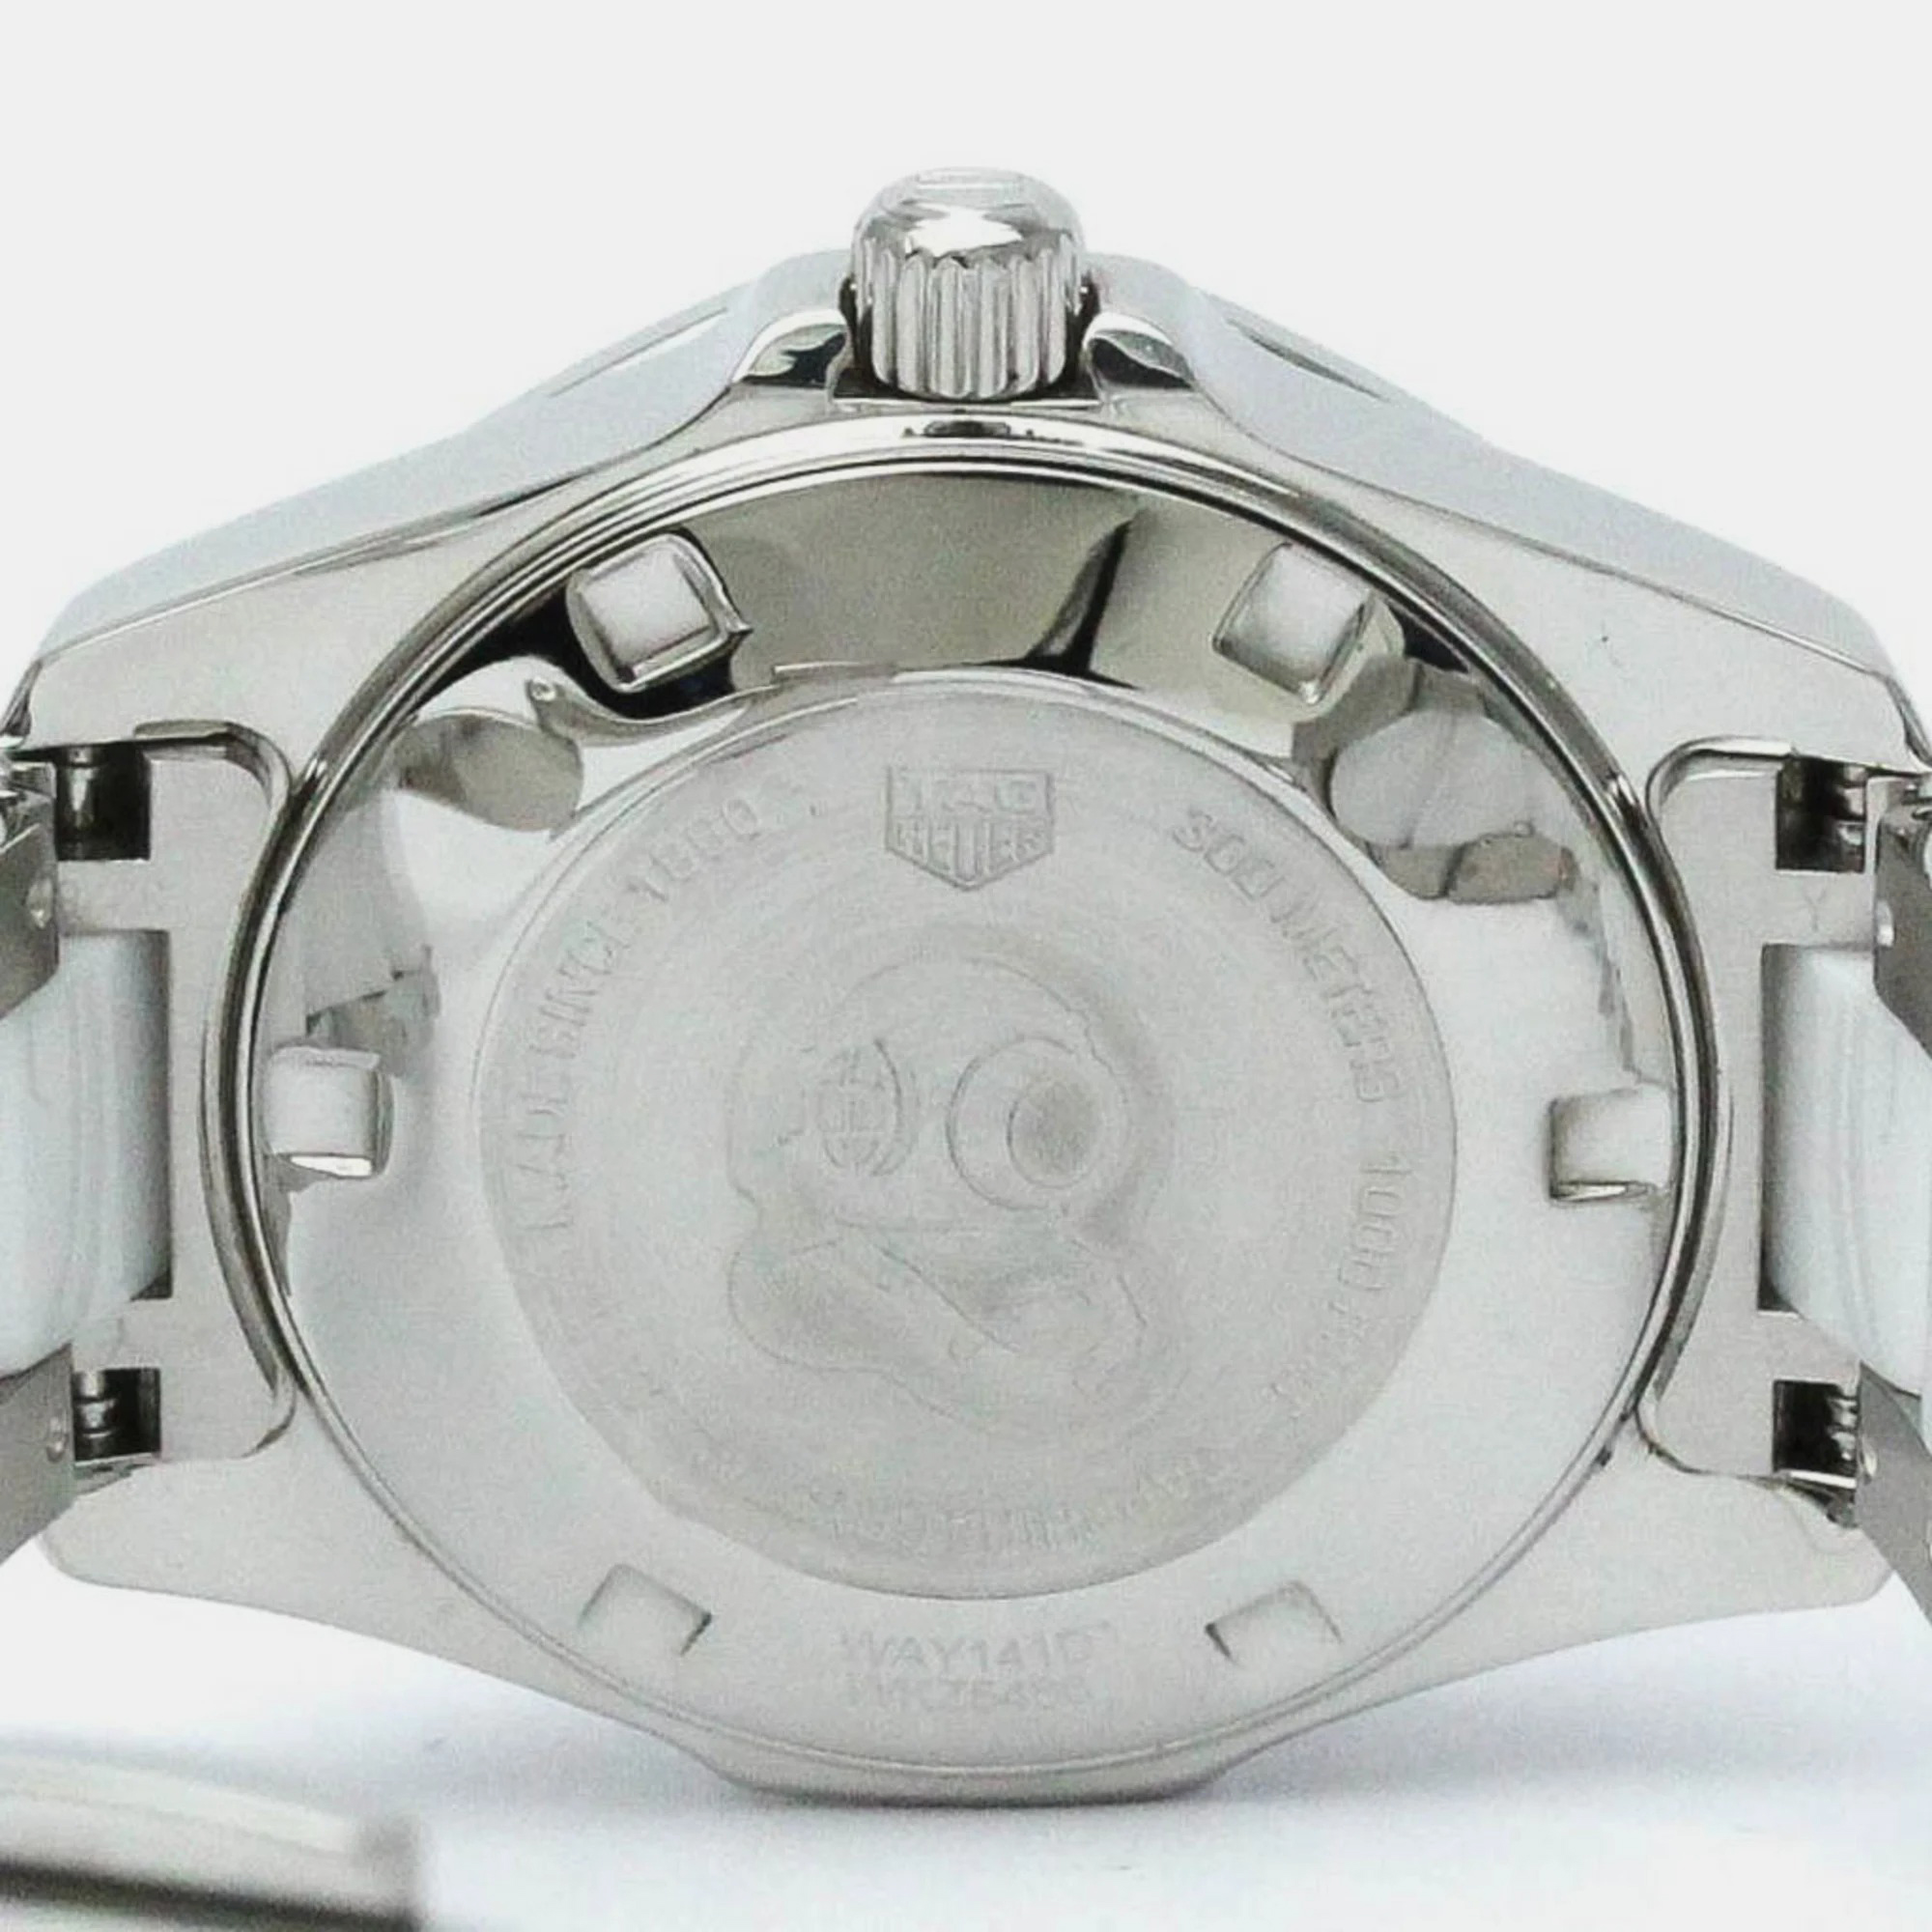 Tag Heuer White Diamond Ceramic And Stainless Steel Aquaracer WAY141D Quartz Women's Wristwatch 30 Mm